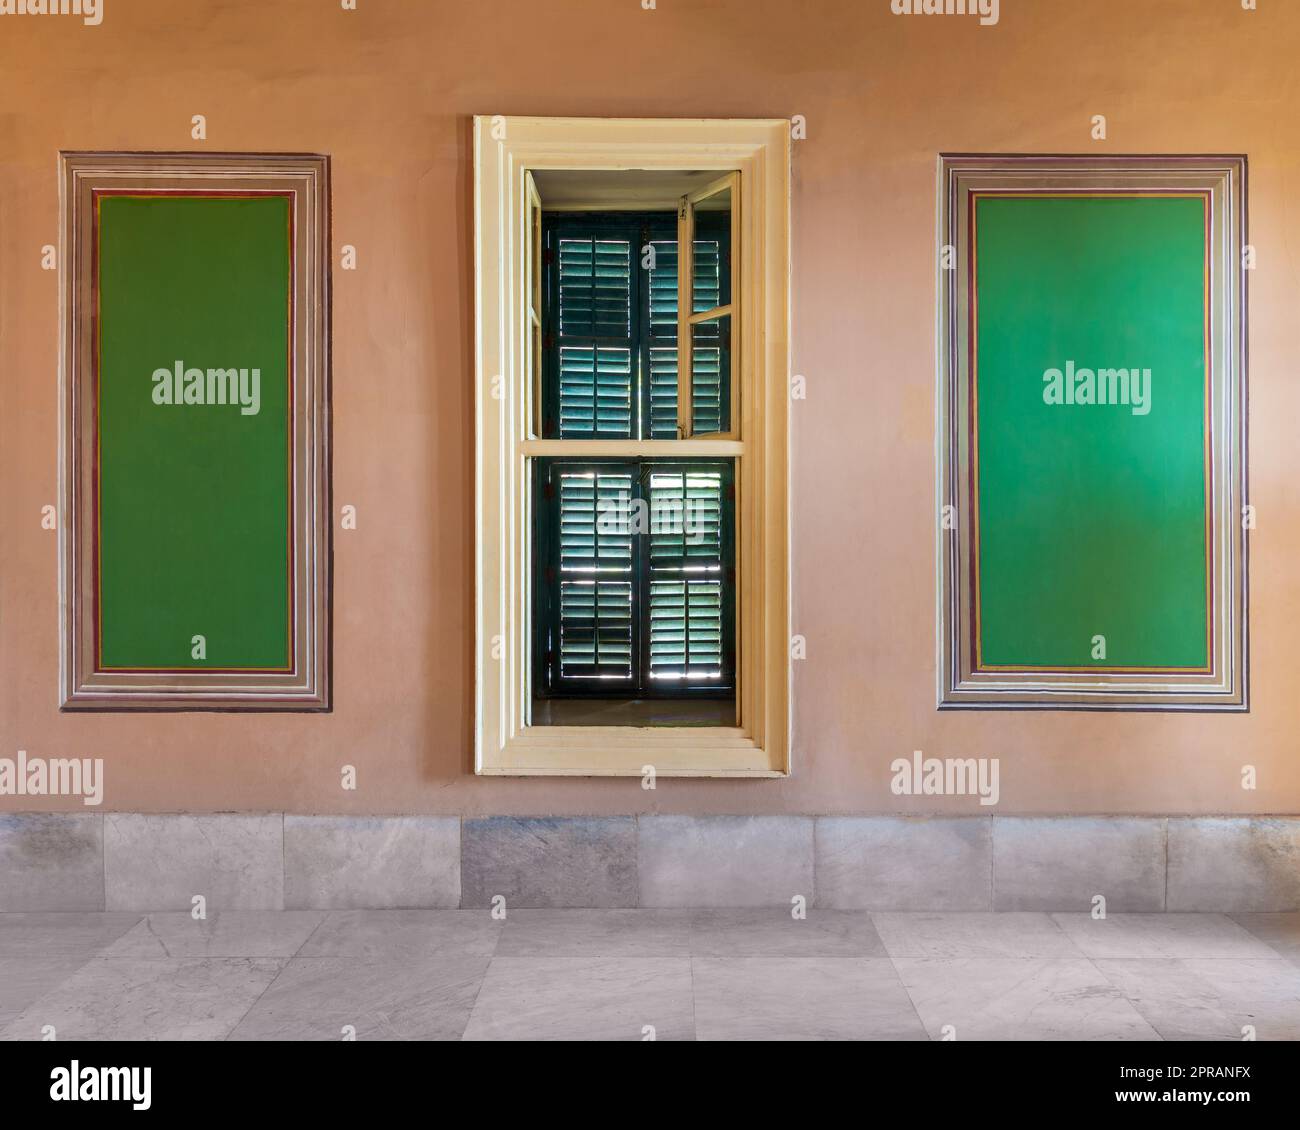 Wooden window with green shutters mediating elegant rectangular green frames on orange wall Stock Photo